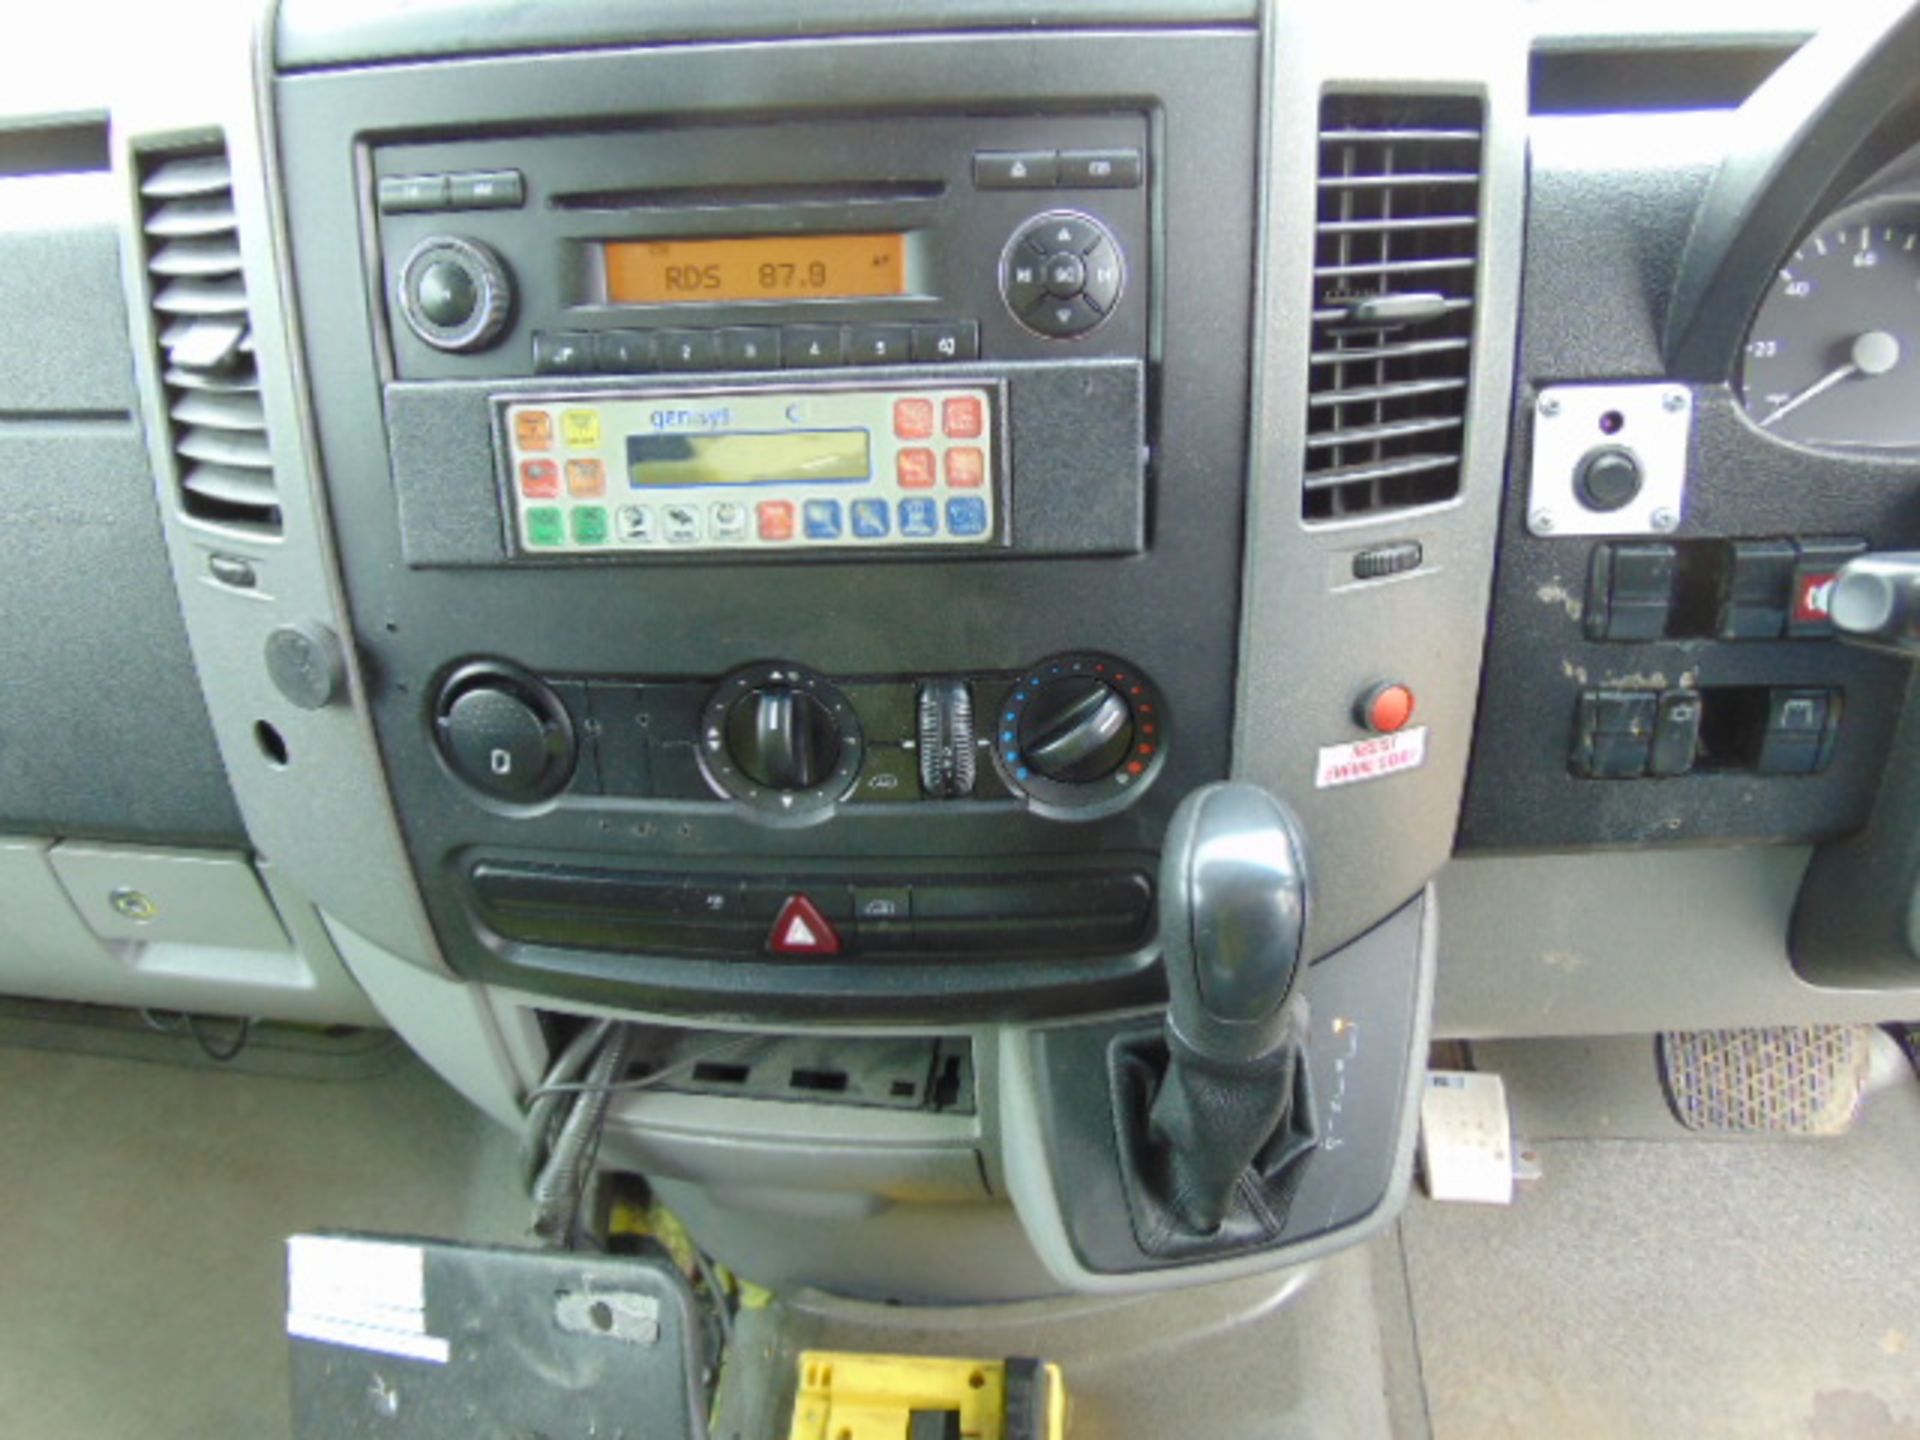 Mercedes Sprinter 515 CDI Turbo diesel ambulance - Image 11 of 22